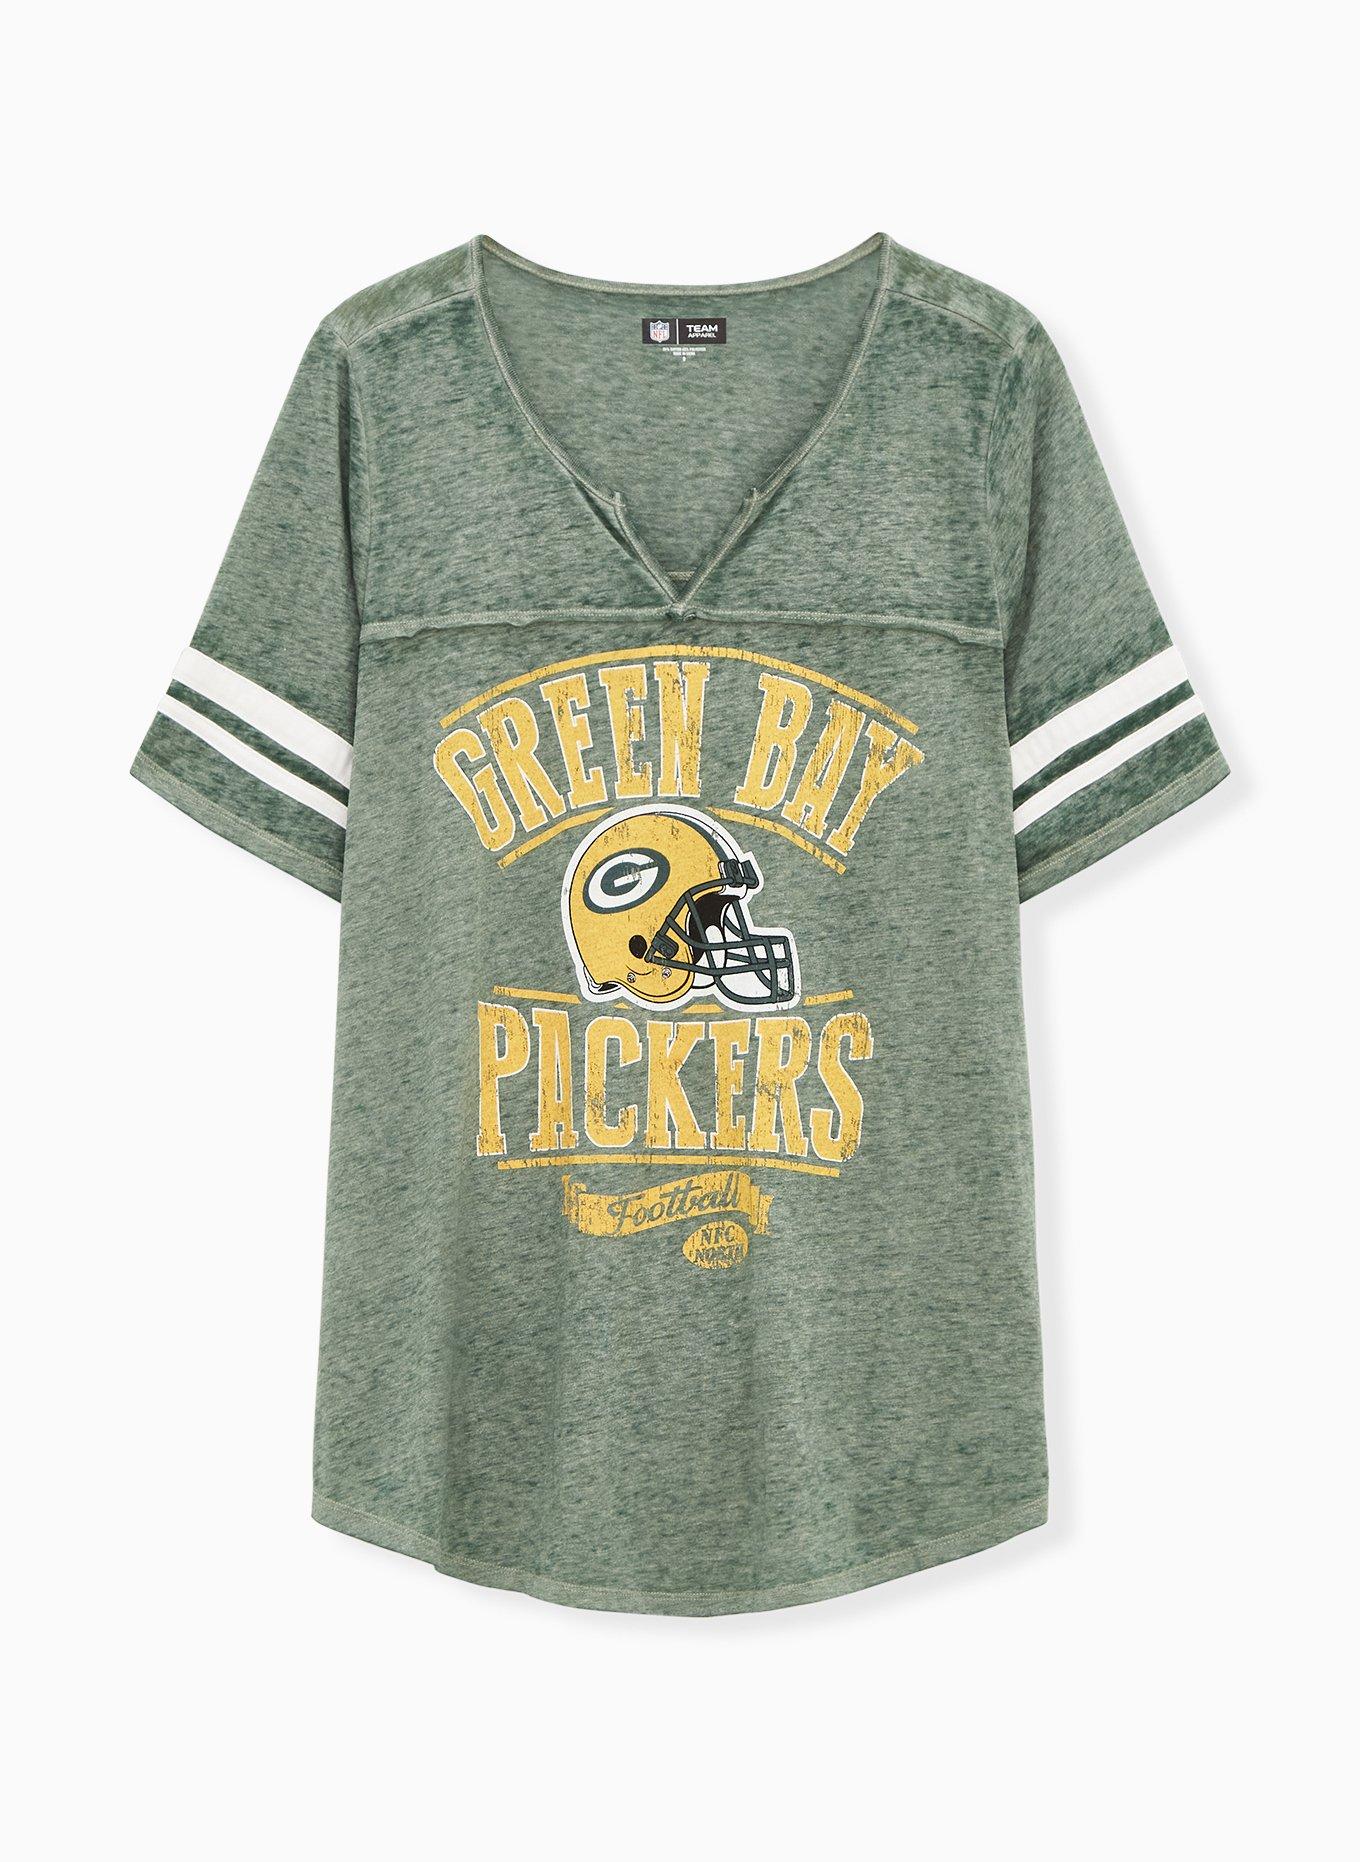 Green Bay Packers Green Team Stripe T-Shirt - NFL Shop Europe - Football 